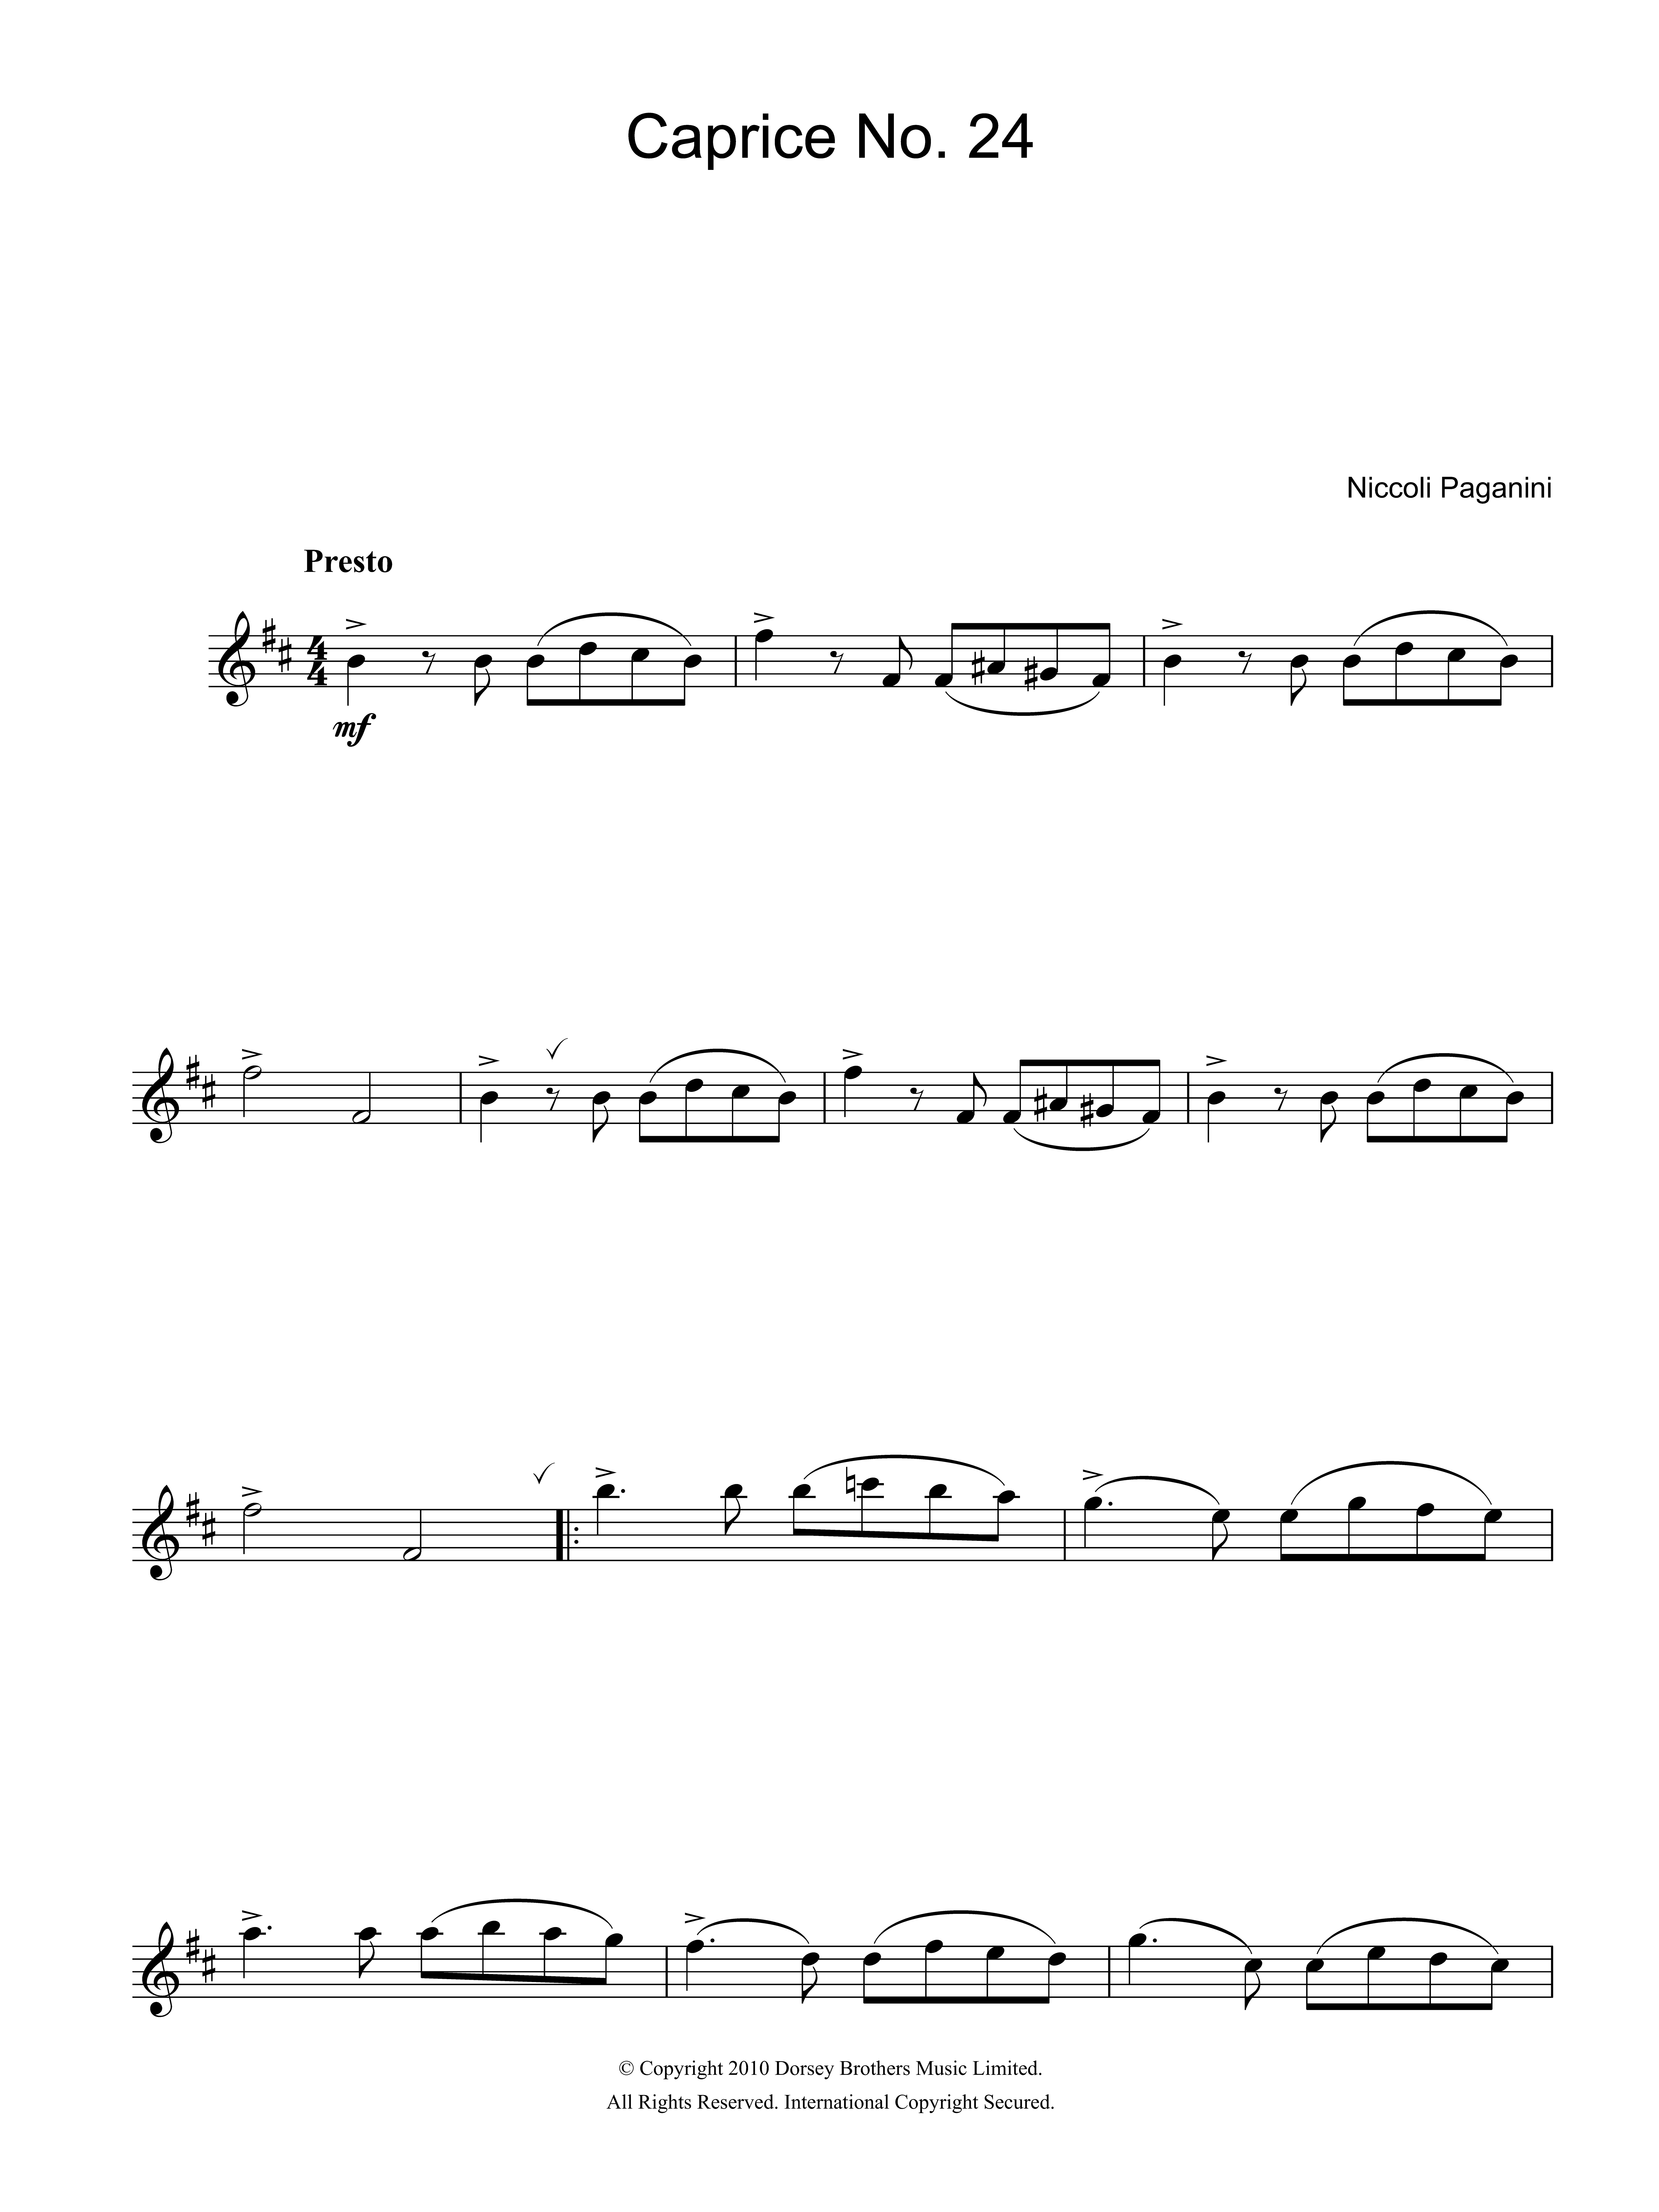 Niccolo Paganini Caprice No. 21 Sheet Music Notes & Chords for Piano Chords/Lyrics - Download or Print PDF